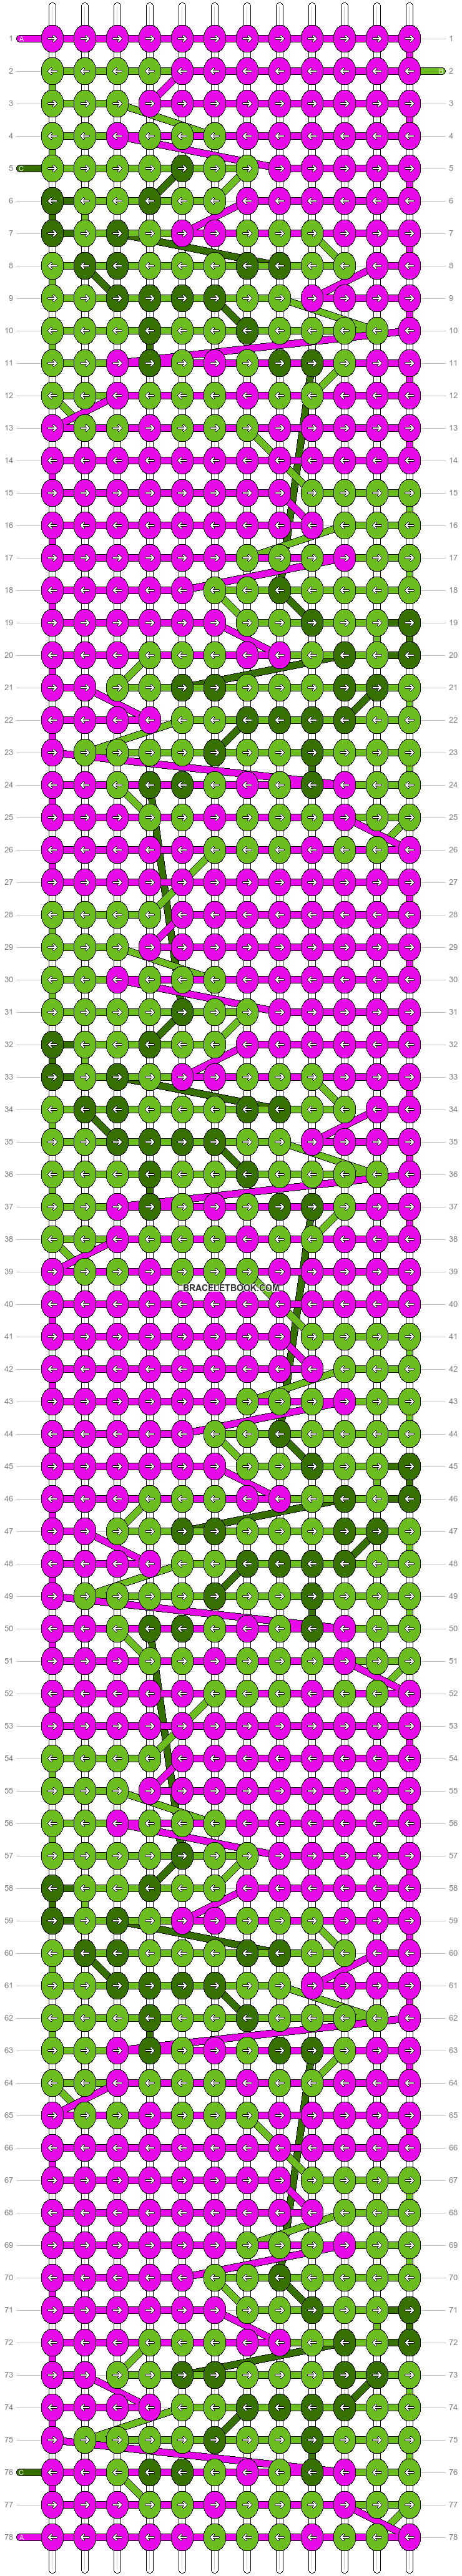 Alpha pattern #57405 variation #119190 pattern